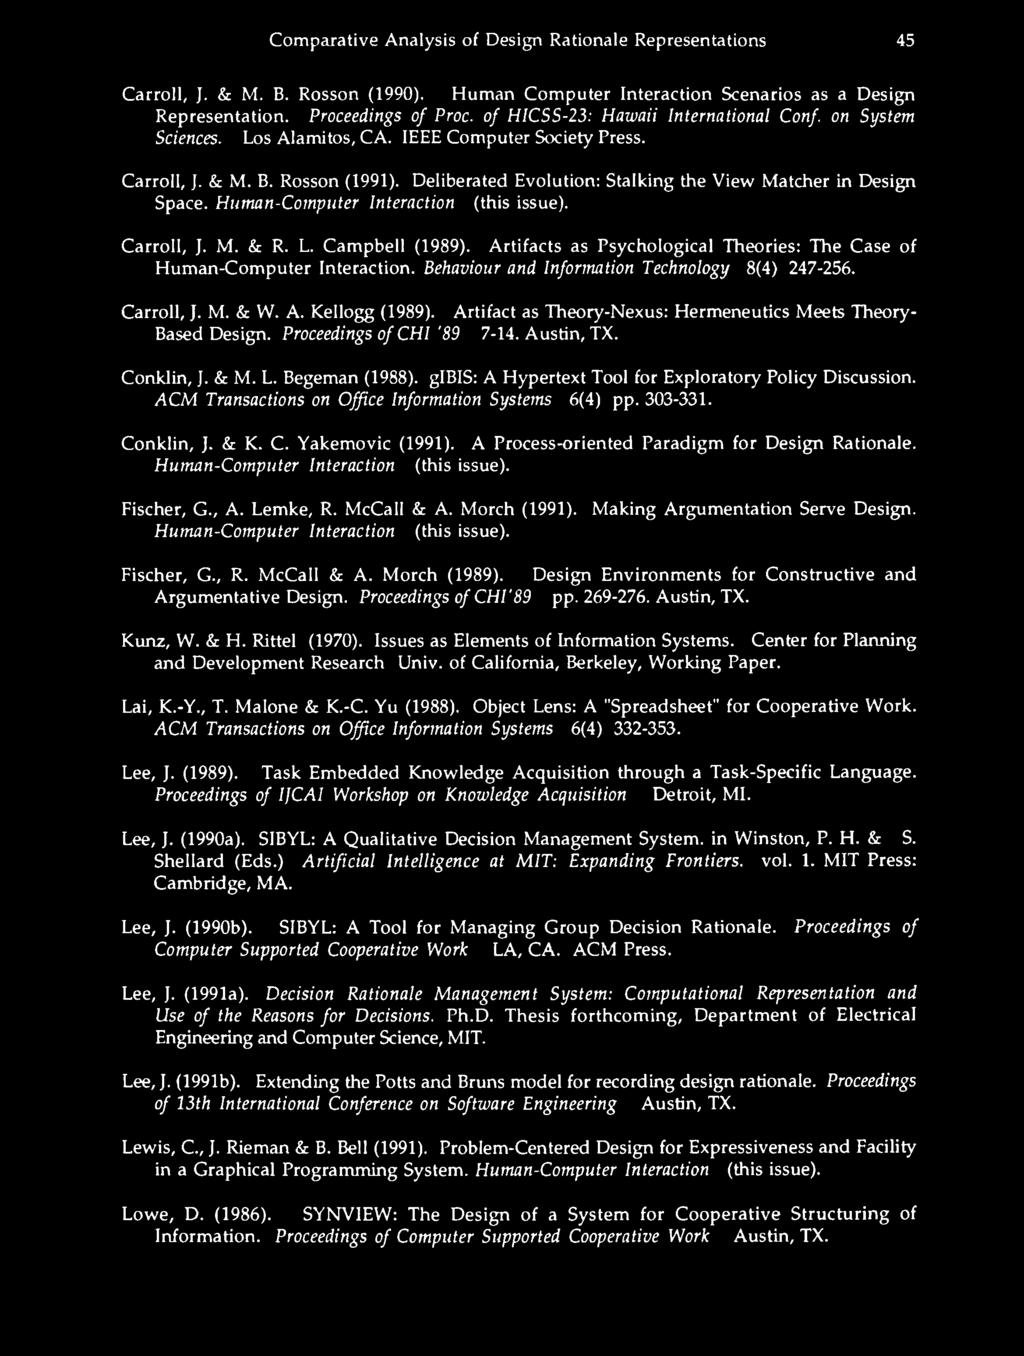 Artifact as Theory-Nexus: Hermeneutics Meets Theory- Based Design. Proceedings of CHI '89 7-14. Austin, TX. Conklin, J. & M. L. Begeman (1988).